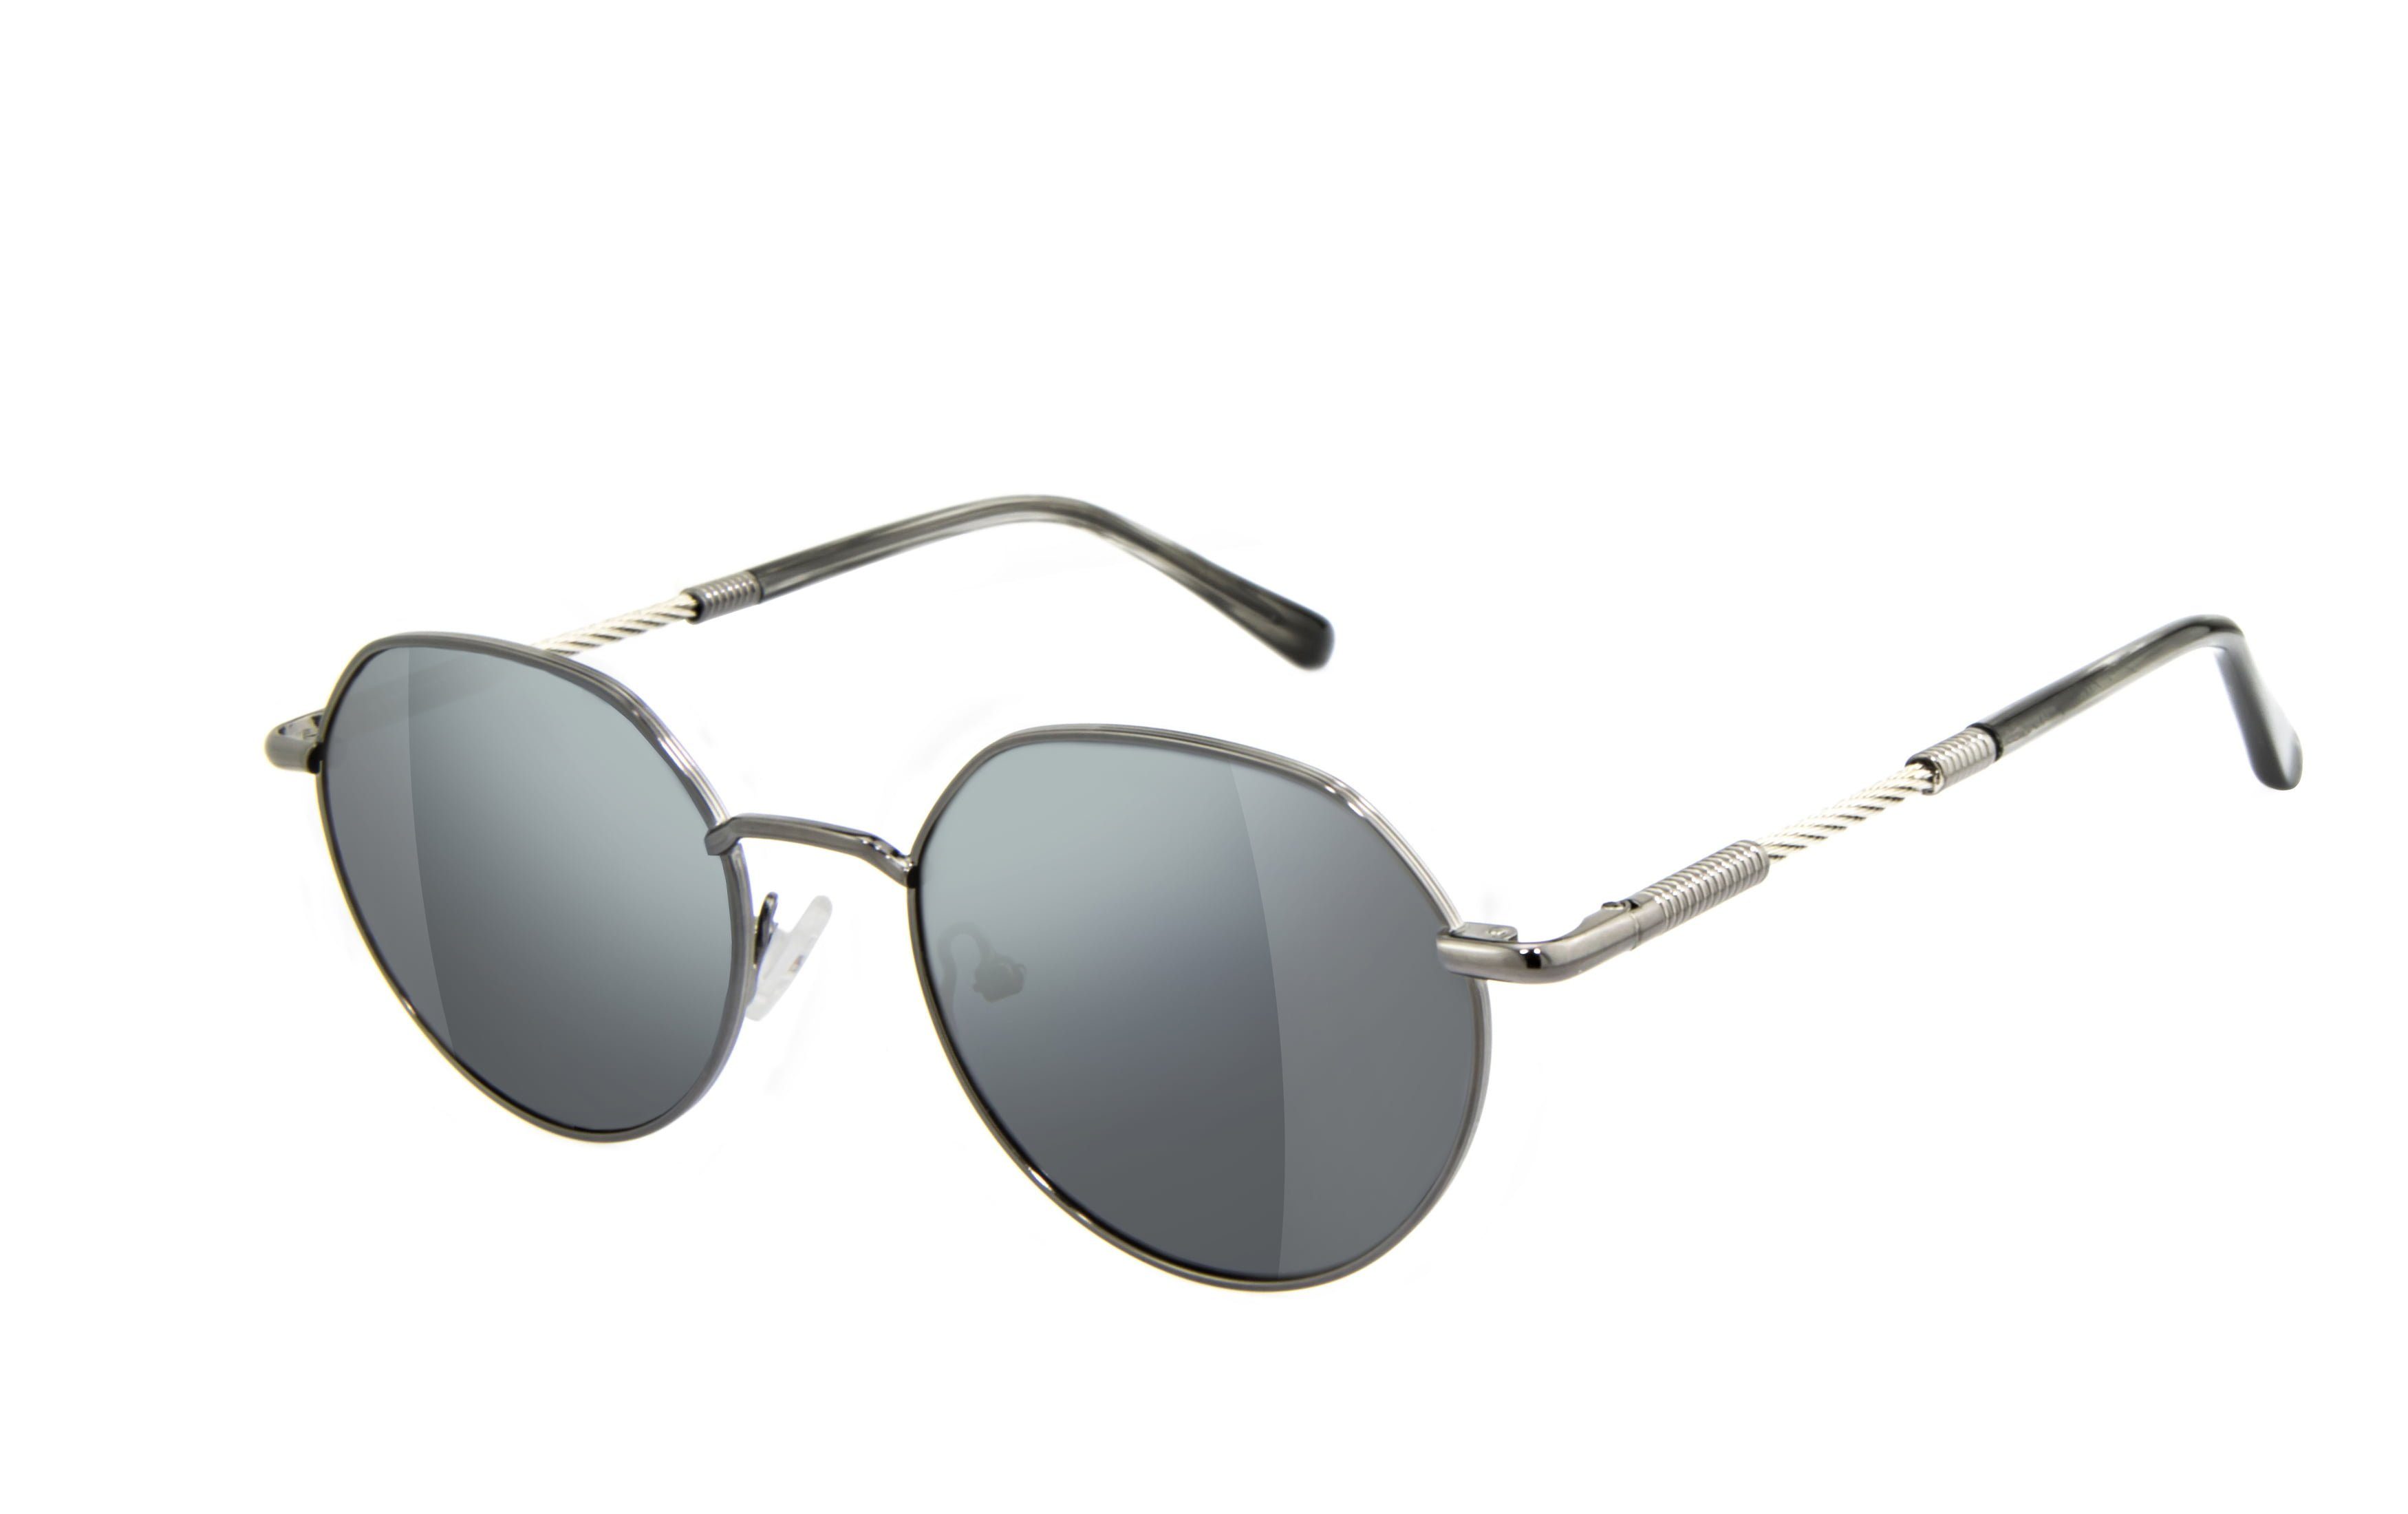 Sonnenbrille Flex-Scharniere BTE003g-a BERTONI EYEWEAR Qualitätsgläser, HLT®